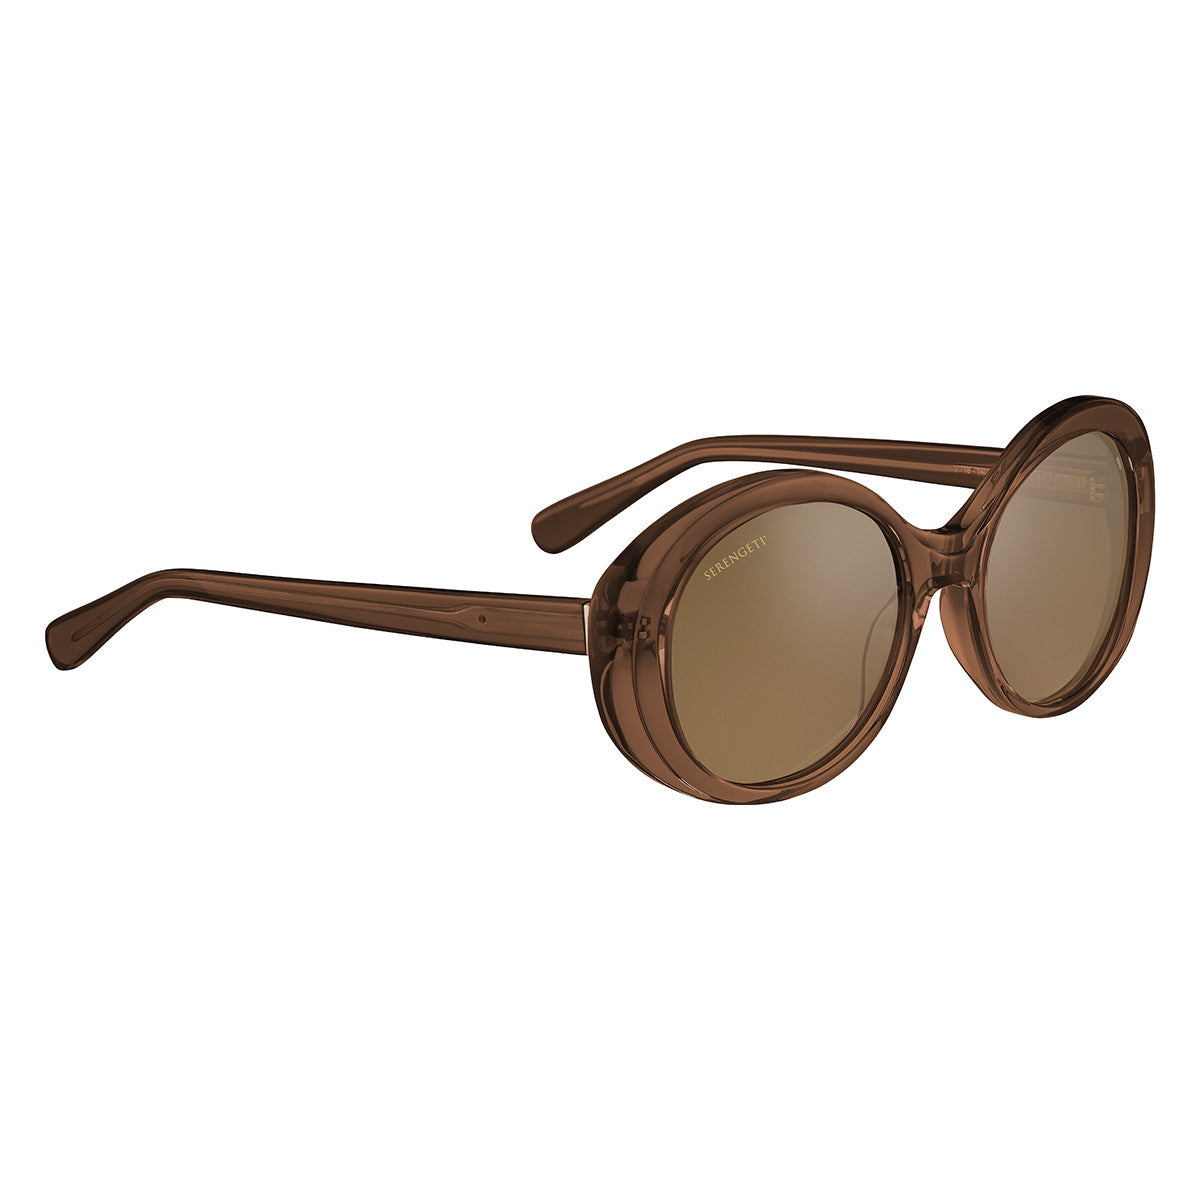 Serengeti Bacall Sunglasses  Shiny Crystal Caramel Brown Small, Medium